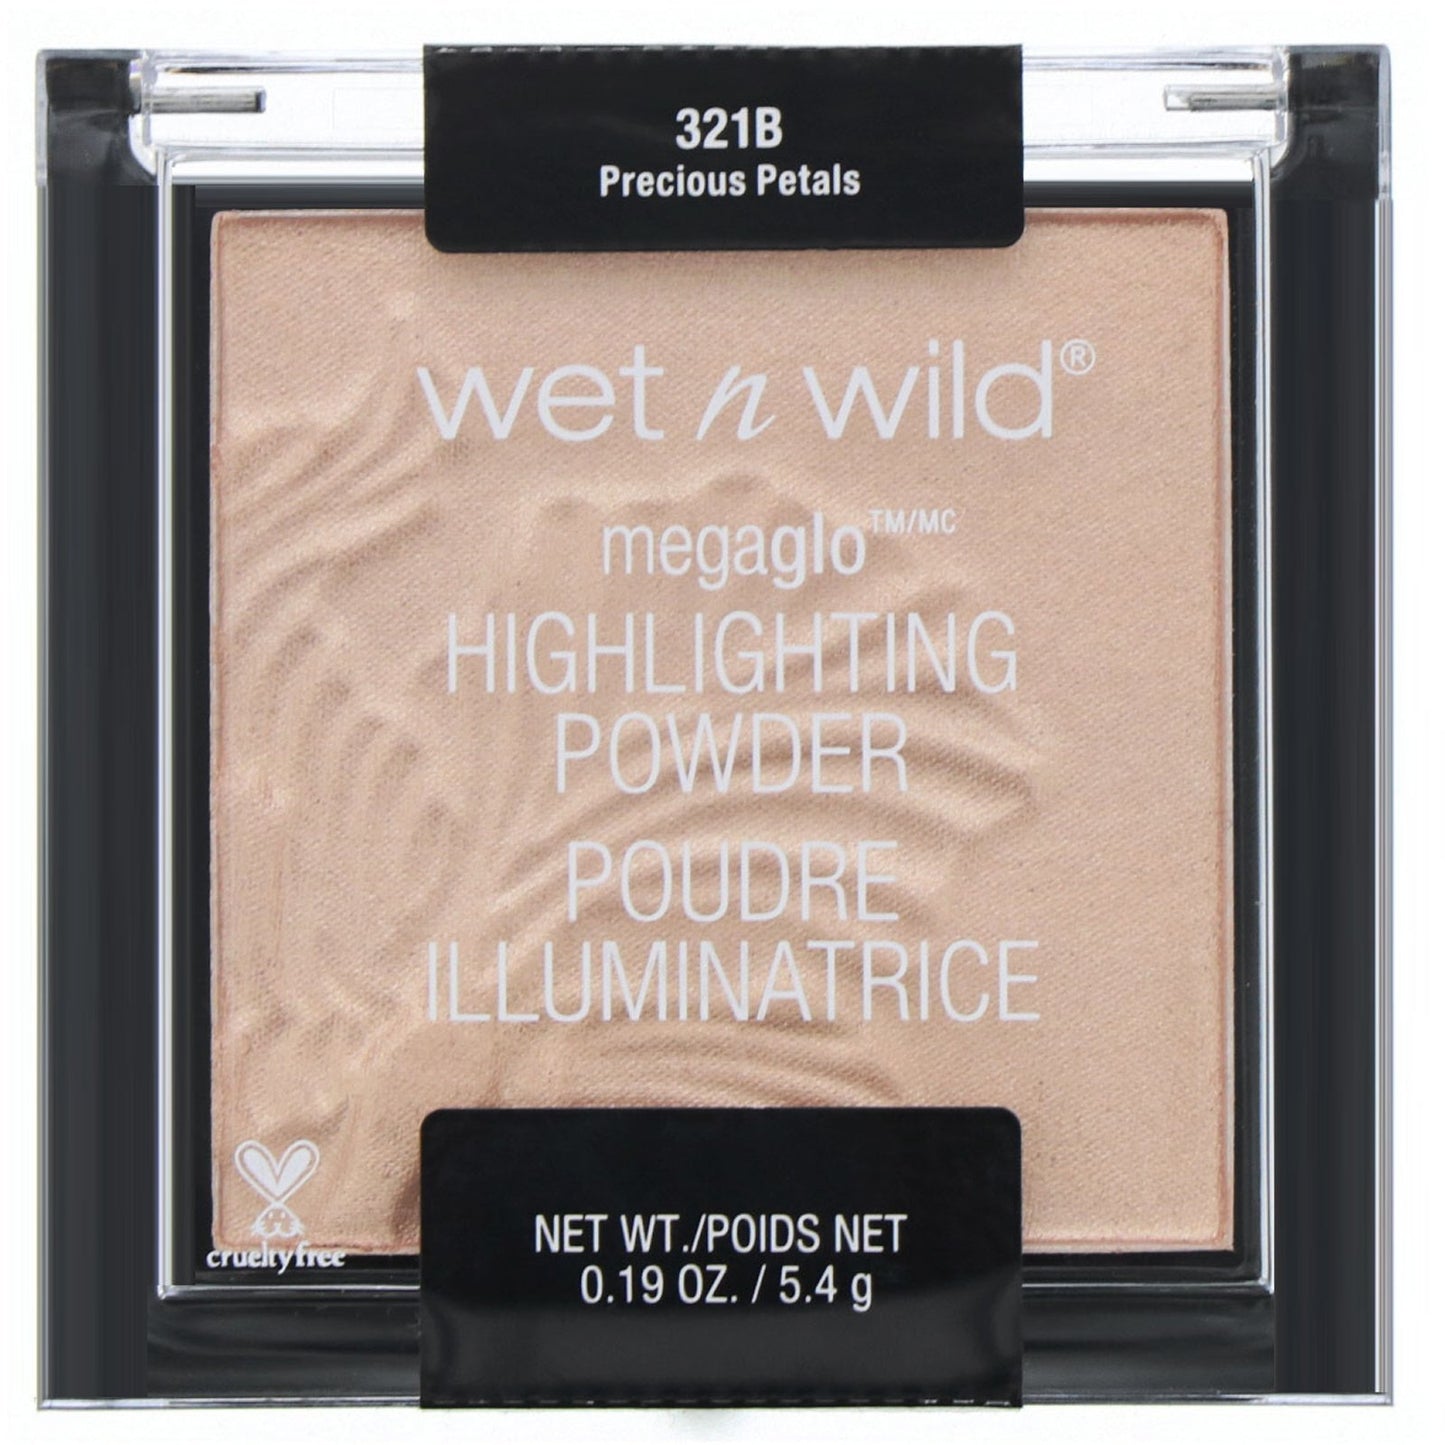 Wet n Wild, MegaGlo Highlighting Powder, Precious Petals, 0.19 oz (5.4 g) by Genuine Collection